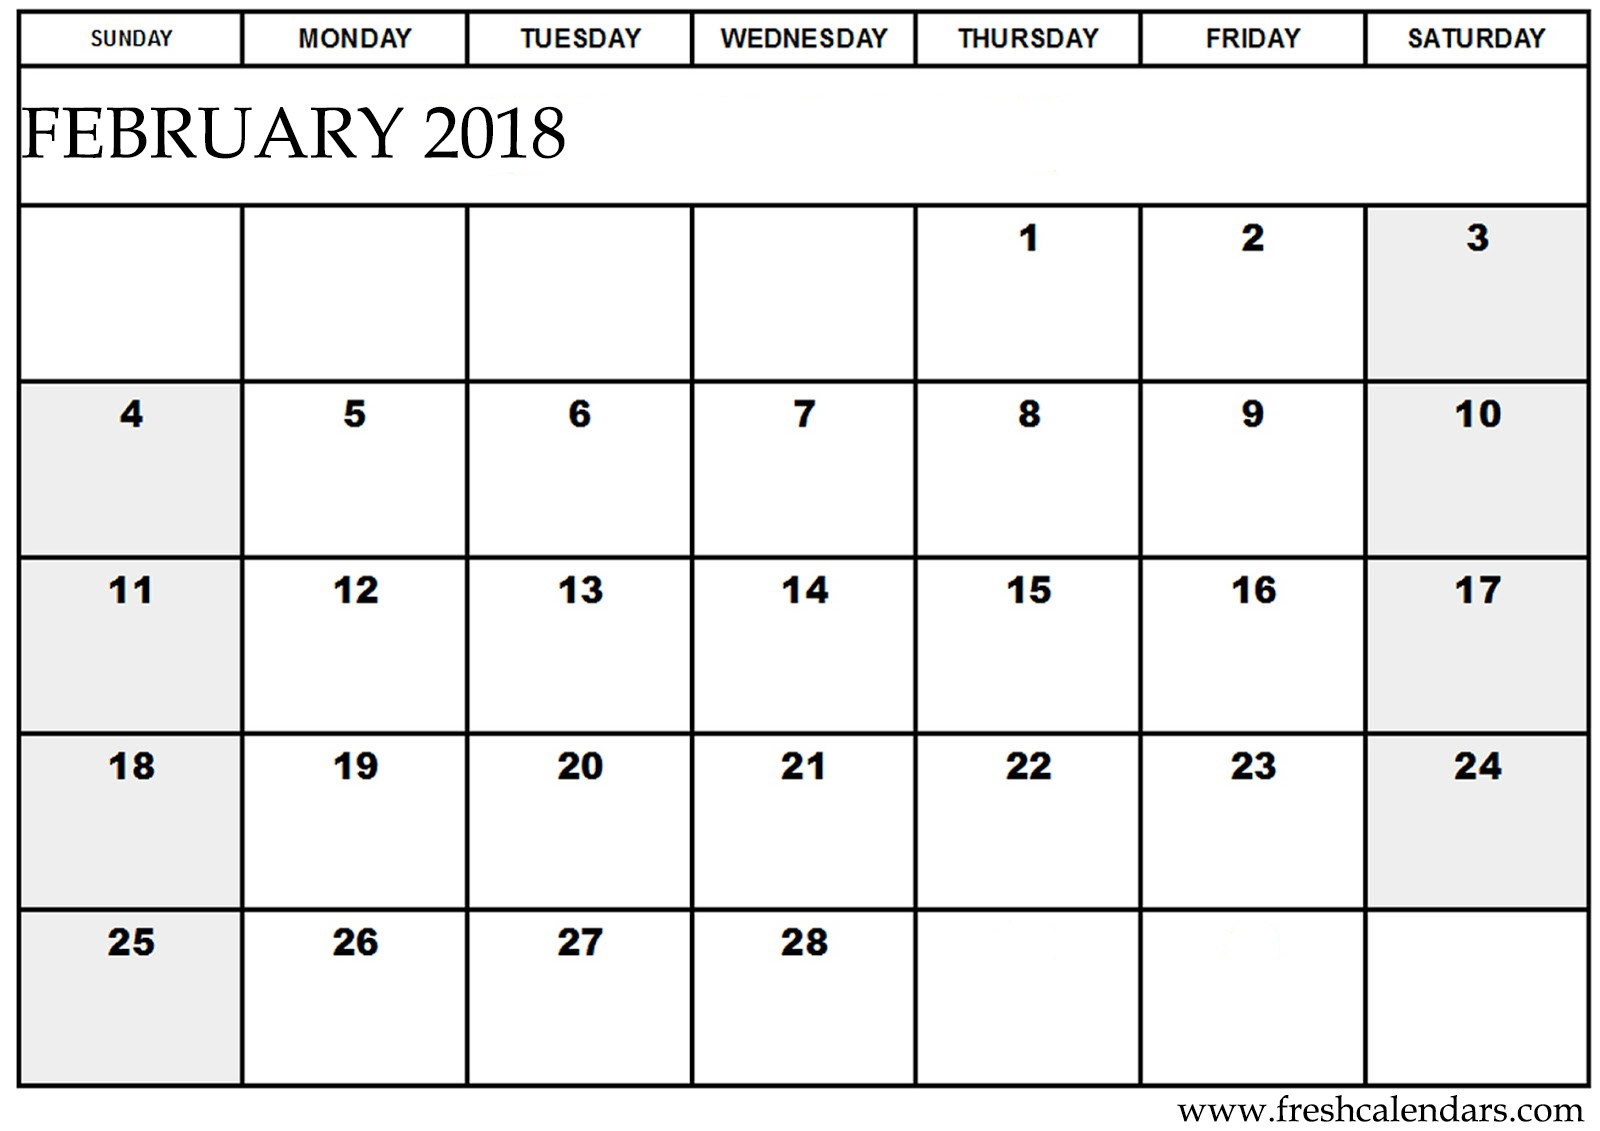 February 2018 Calendar Saturday and Sunday Highlight